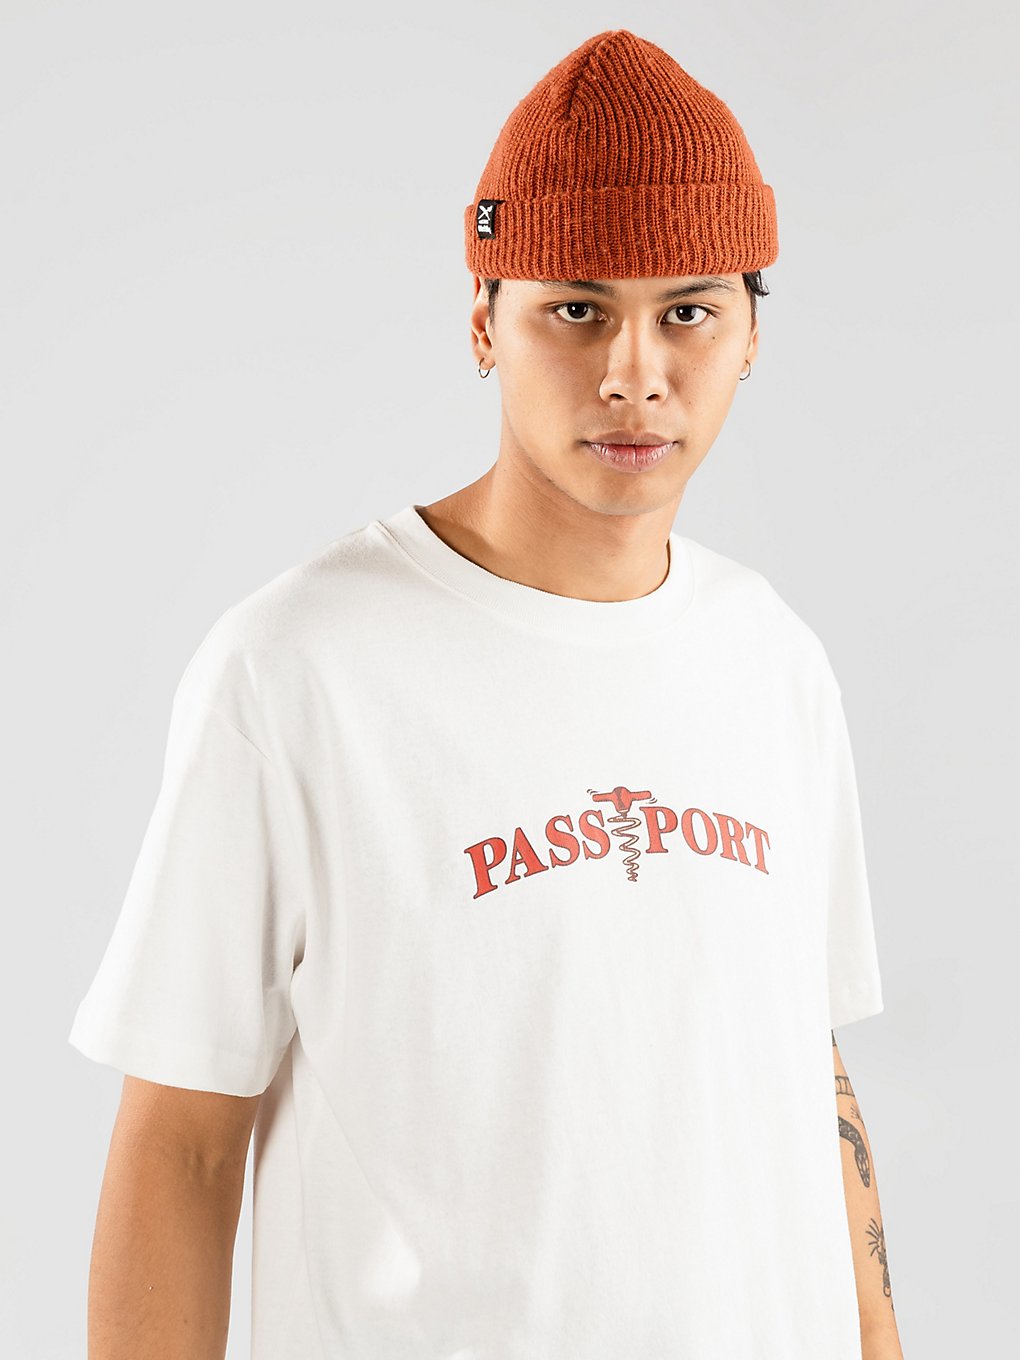 Pass Port Corkscrew T-Shirt white kaufen